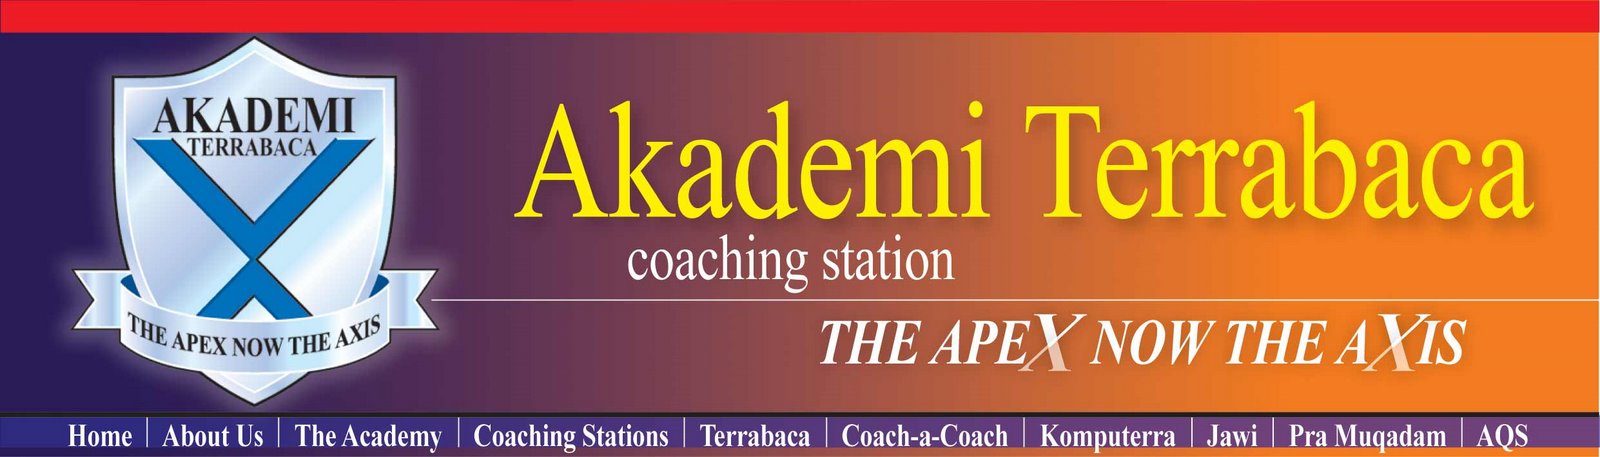 AKADEMI TERRABACA coaching station